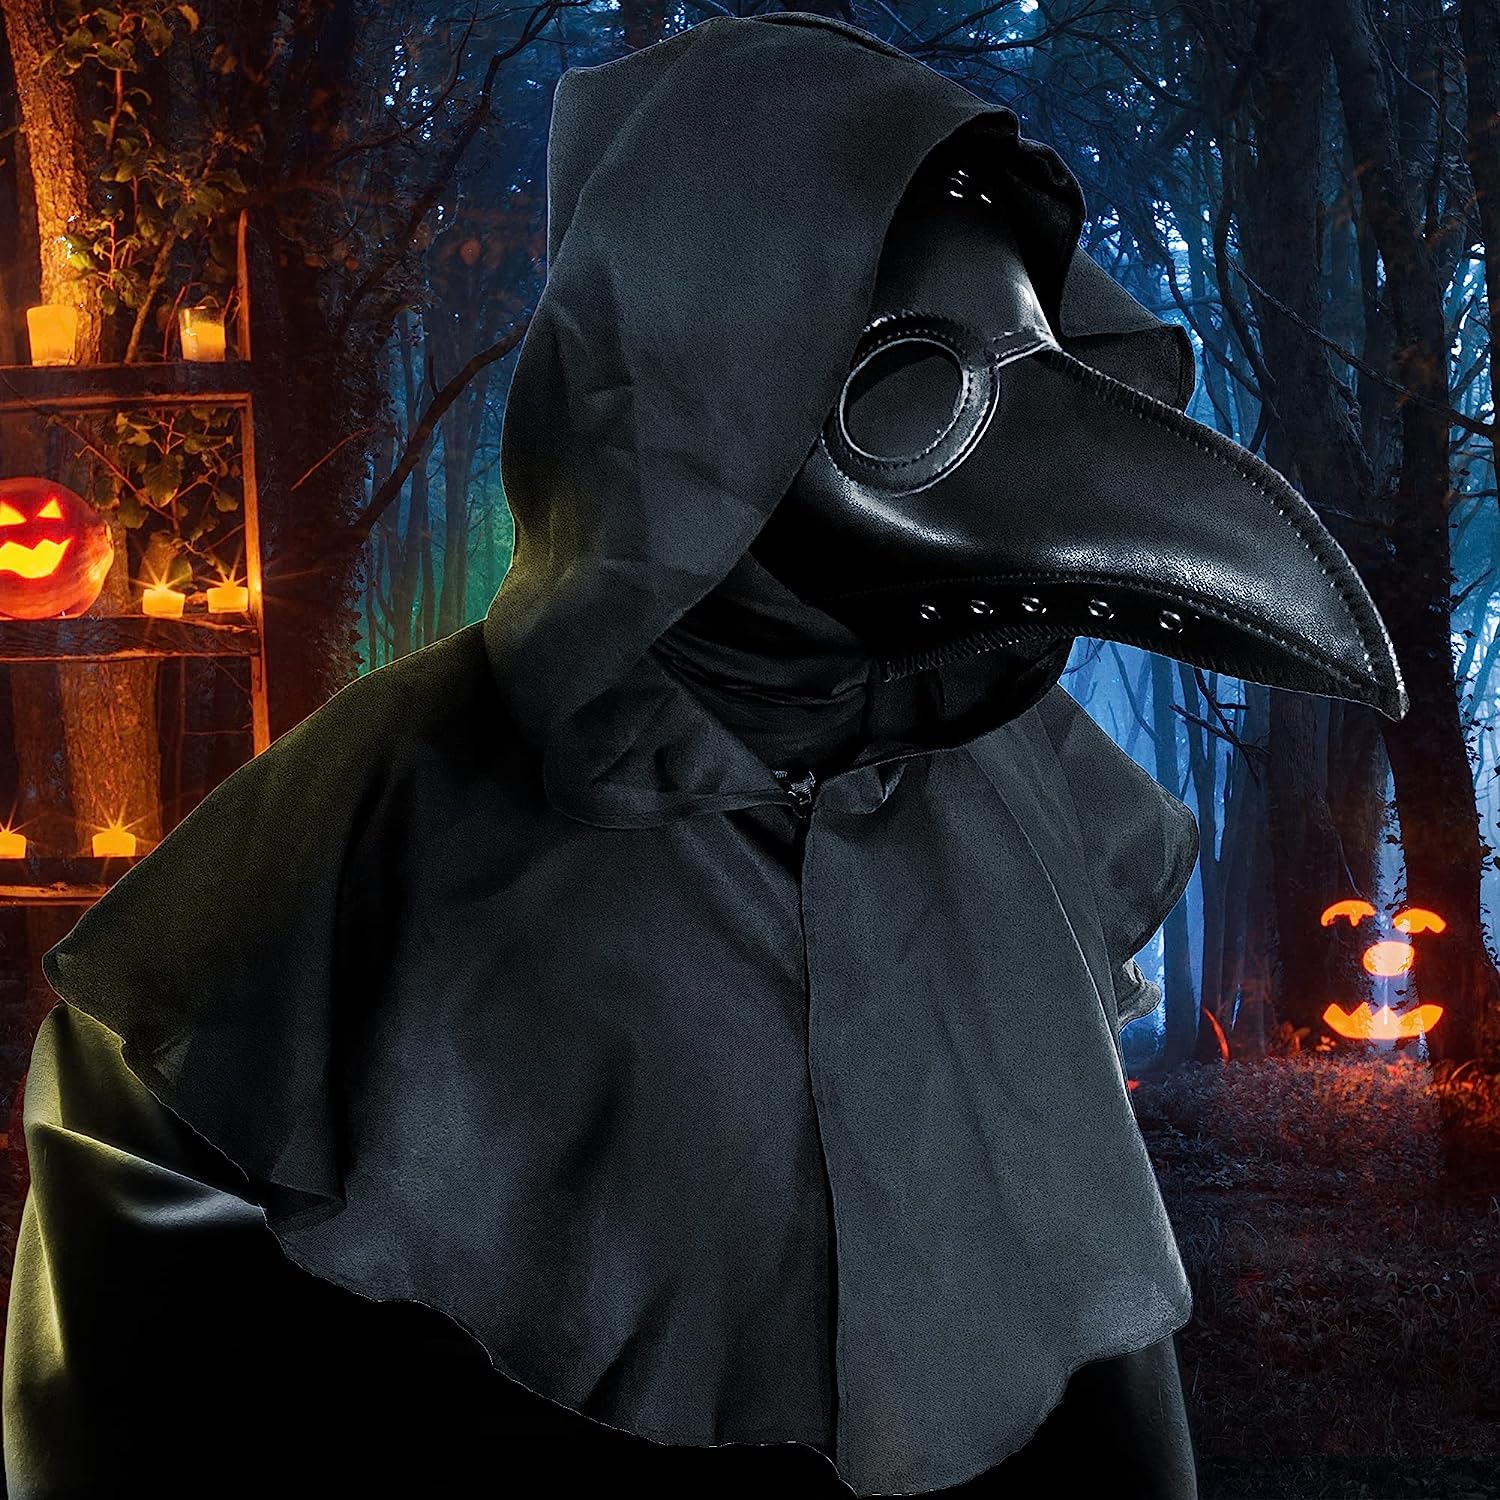 Steampunk Plague Doctor Long Nose Halloween Adult Masquerade Mask Cosplay  Pantalone Bird Metallic Gold